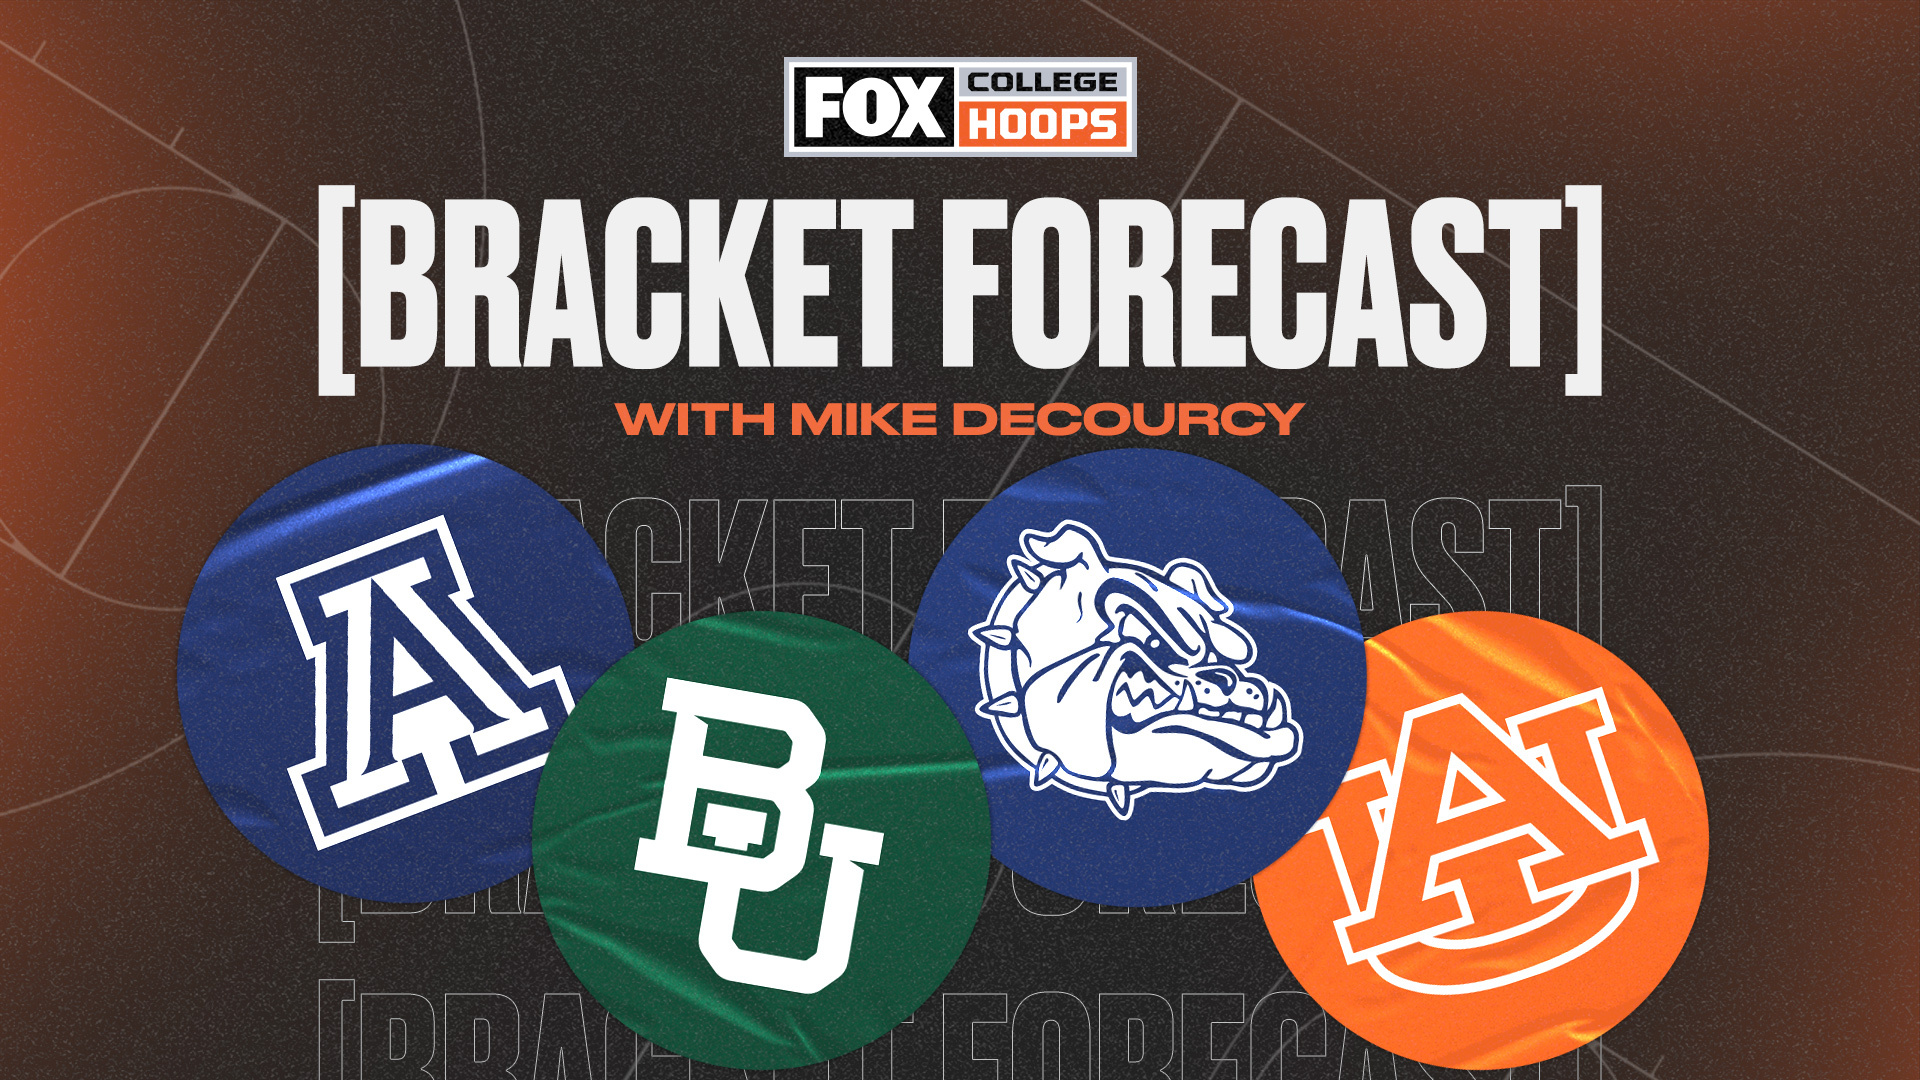 Bracket Forecast: Gonzaga, Auburn, Baylor and Arizona still on top